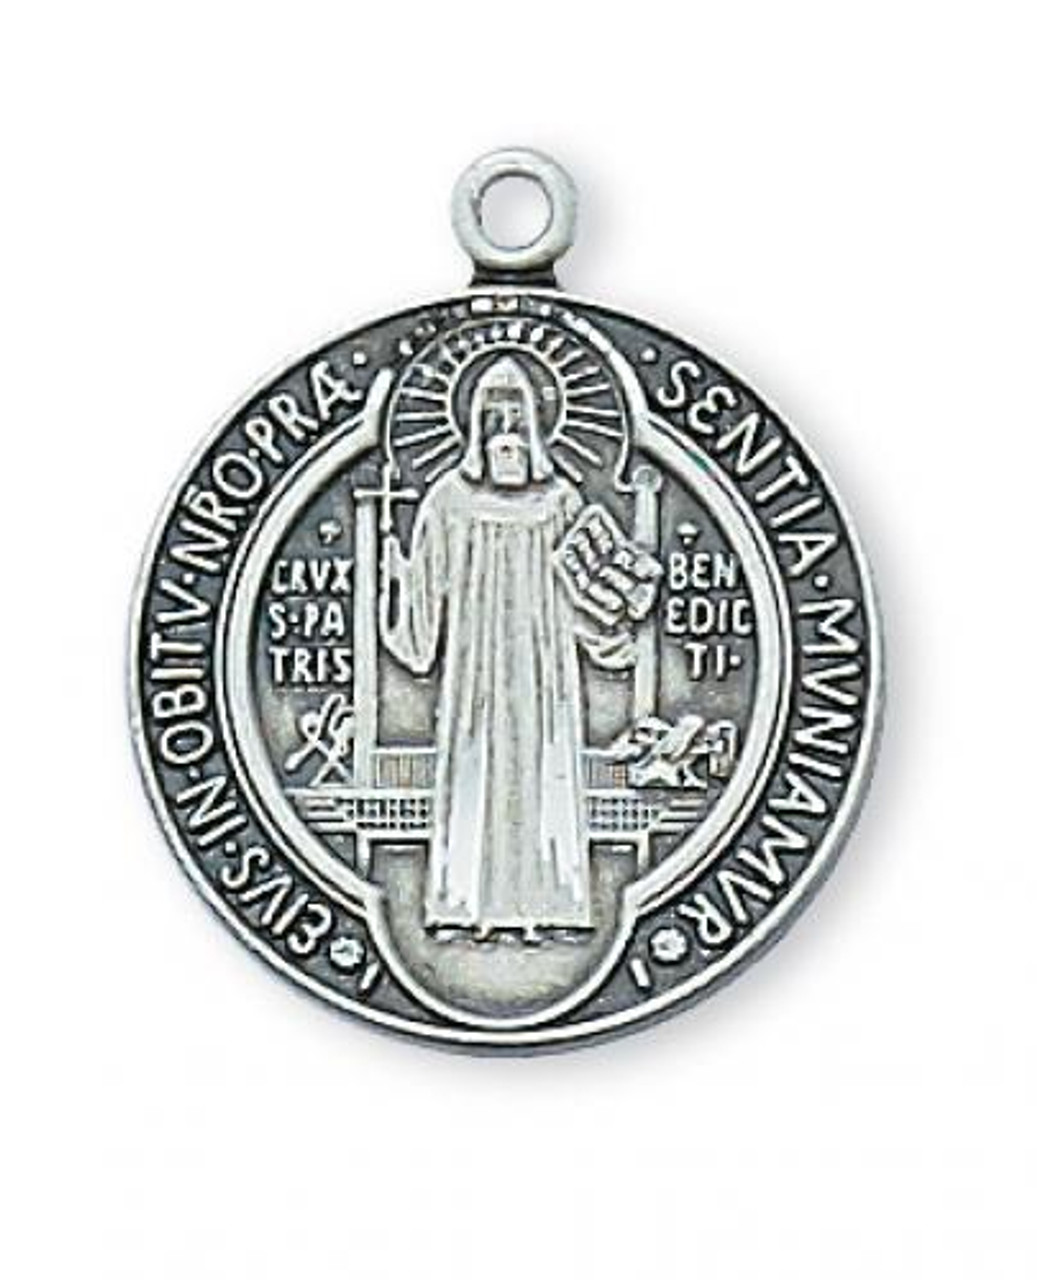 St. Benedict Medal In a Gold Frame